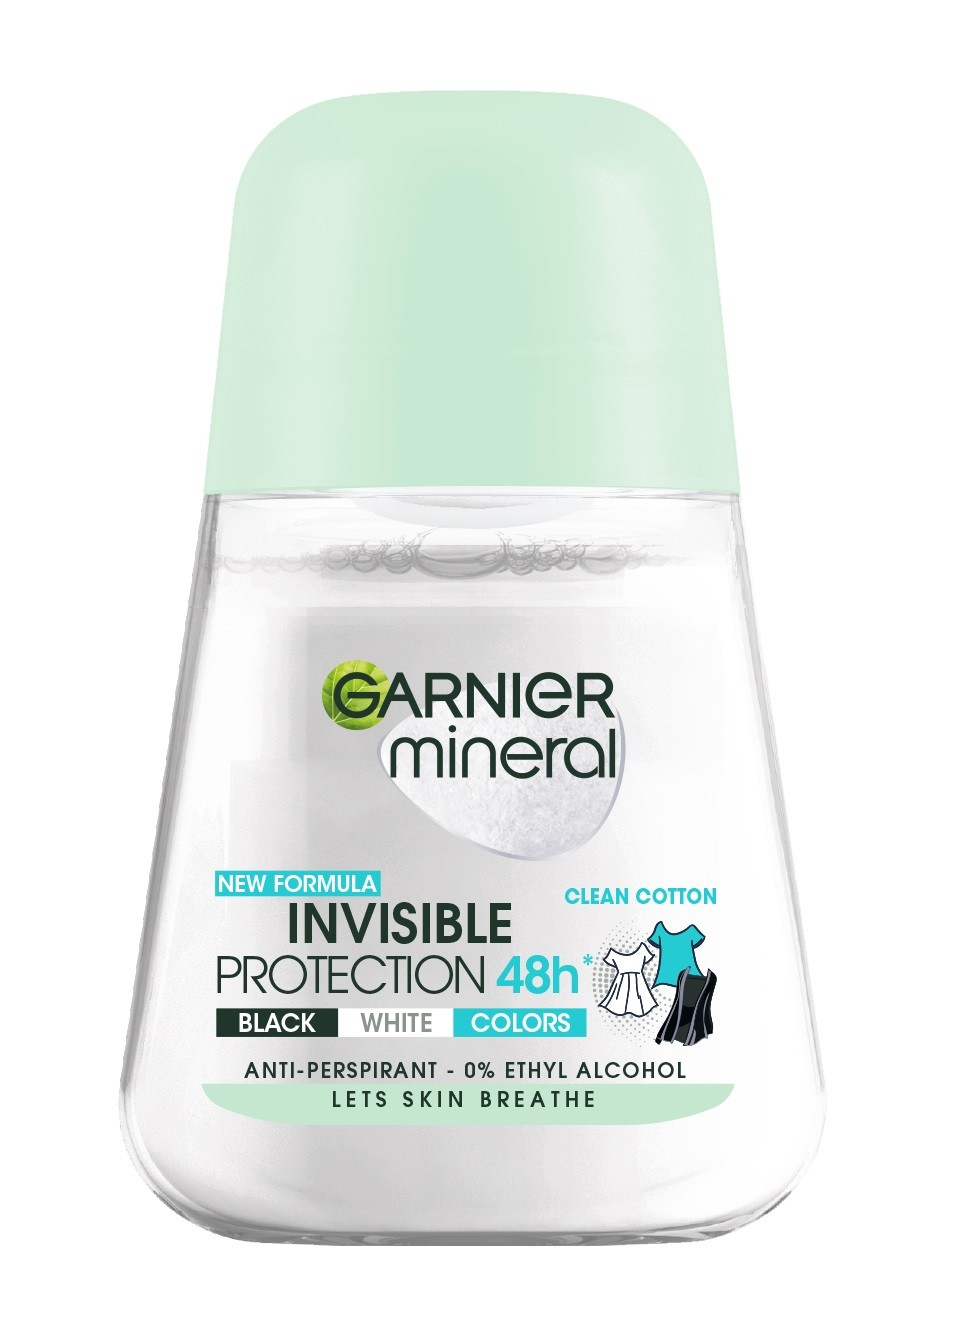 Garnier Mineral Dezodorant roll-on Invisible Protection 48h Clean Cotton- Black,White,Colors   50ml